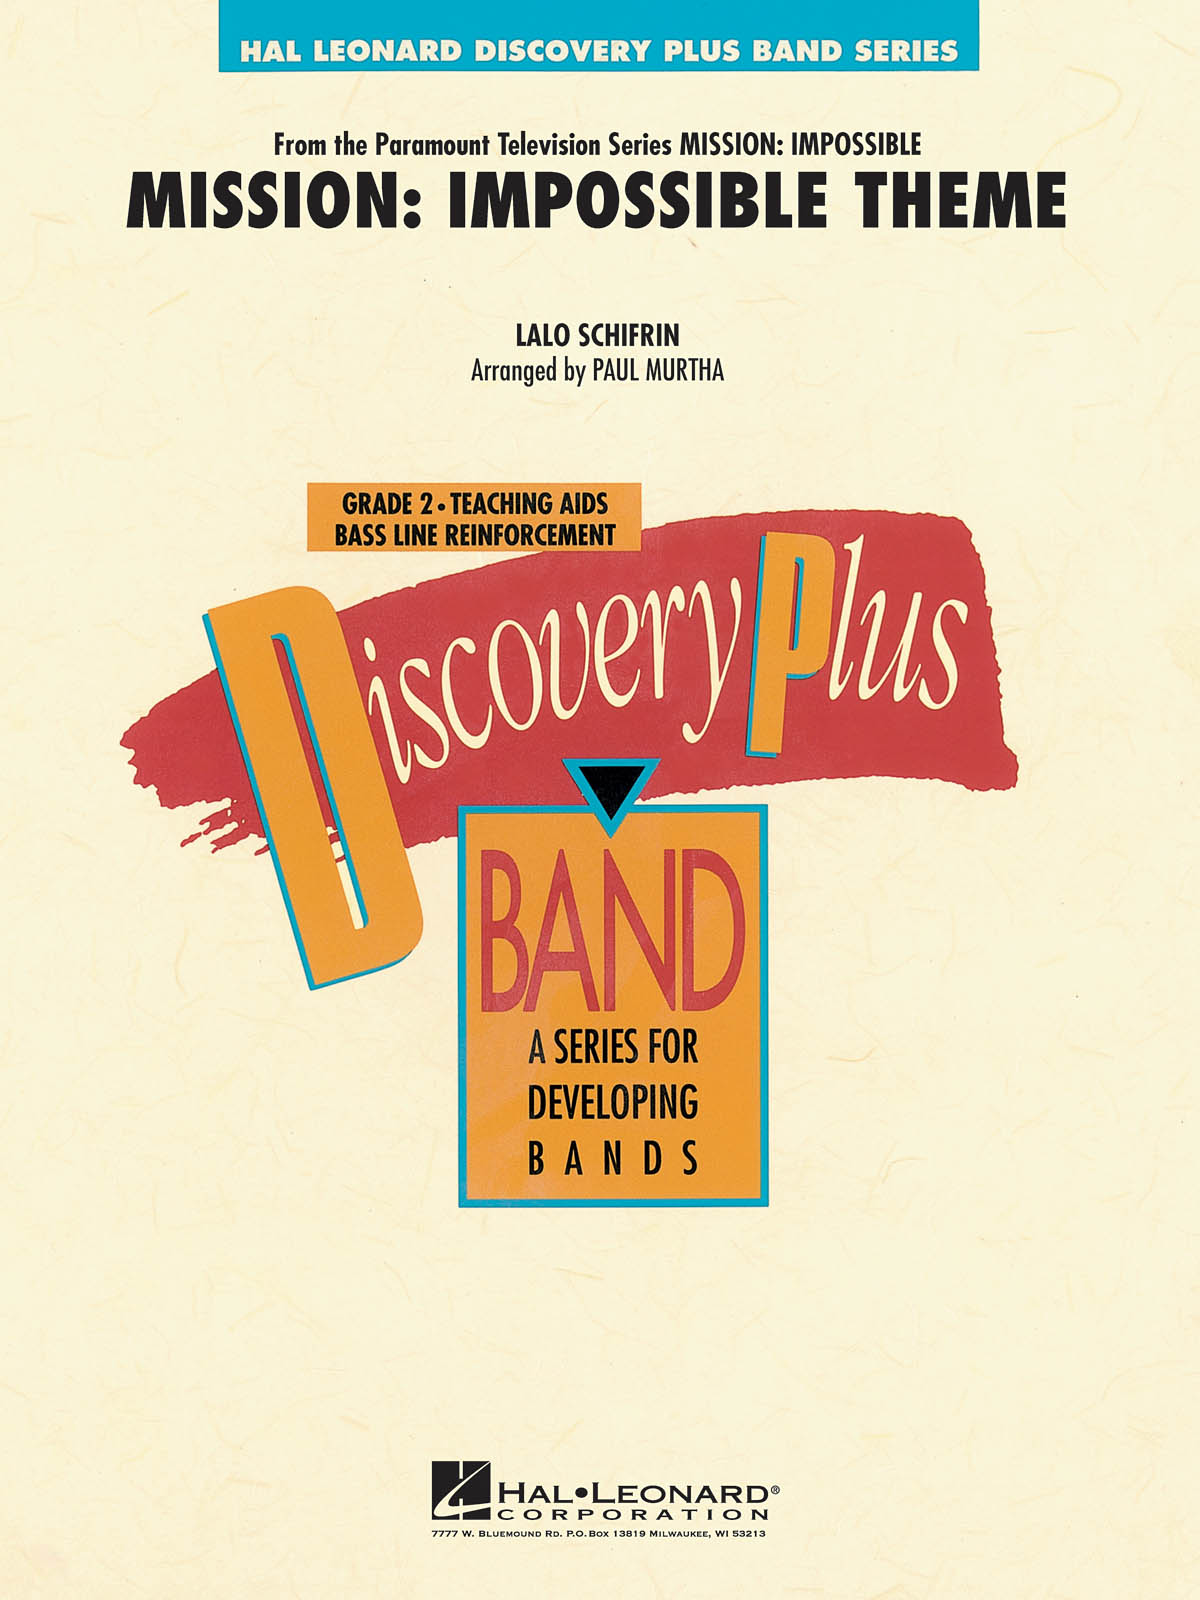 Lalo Schifrin: Mission Impossible Theme: Concert Band: Score